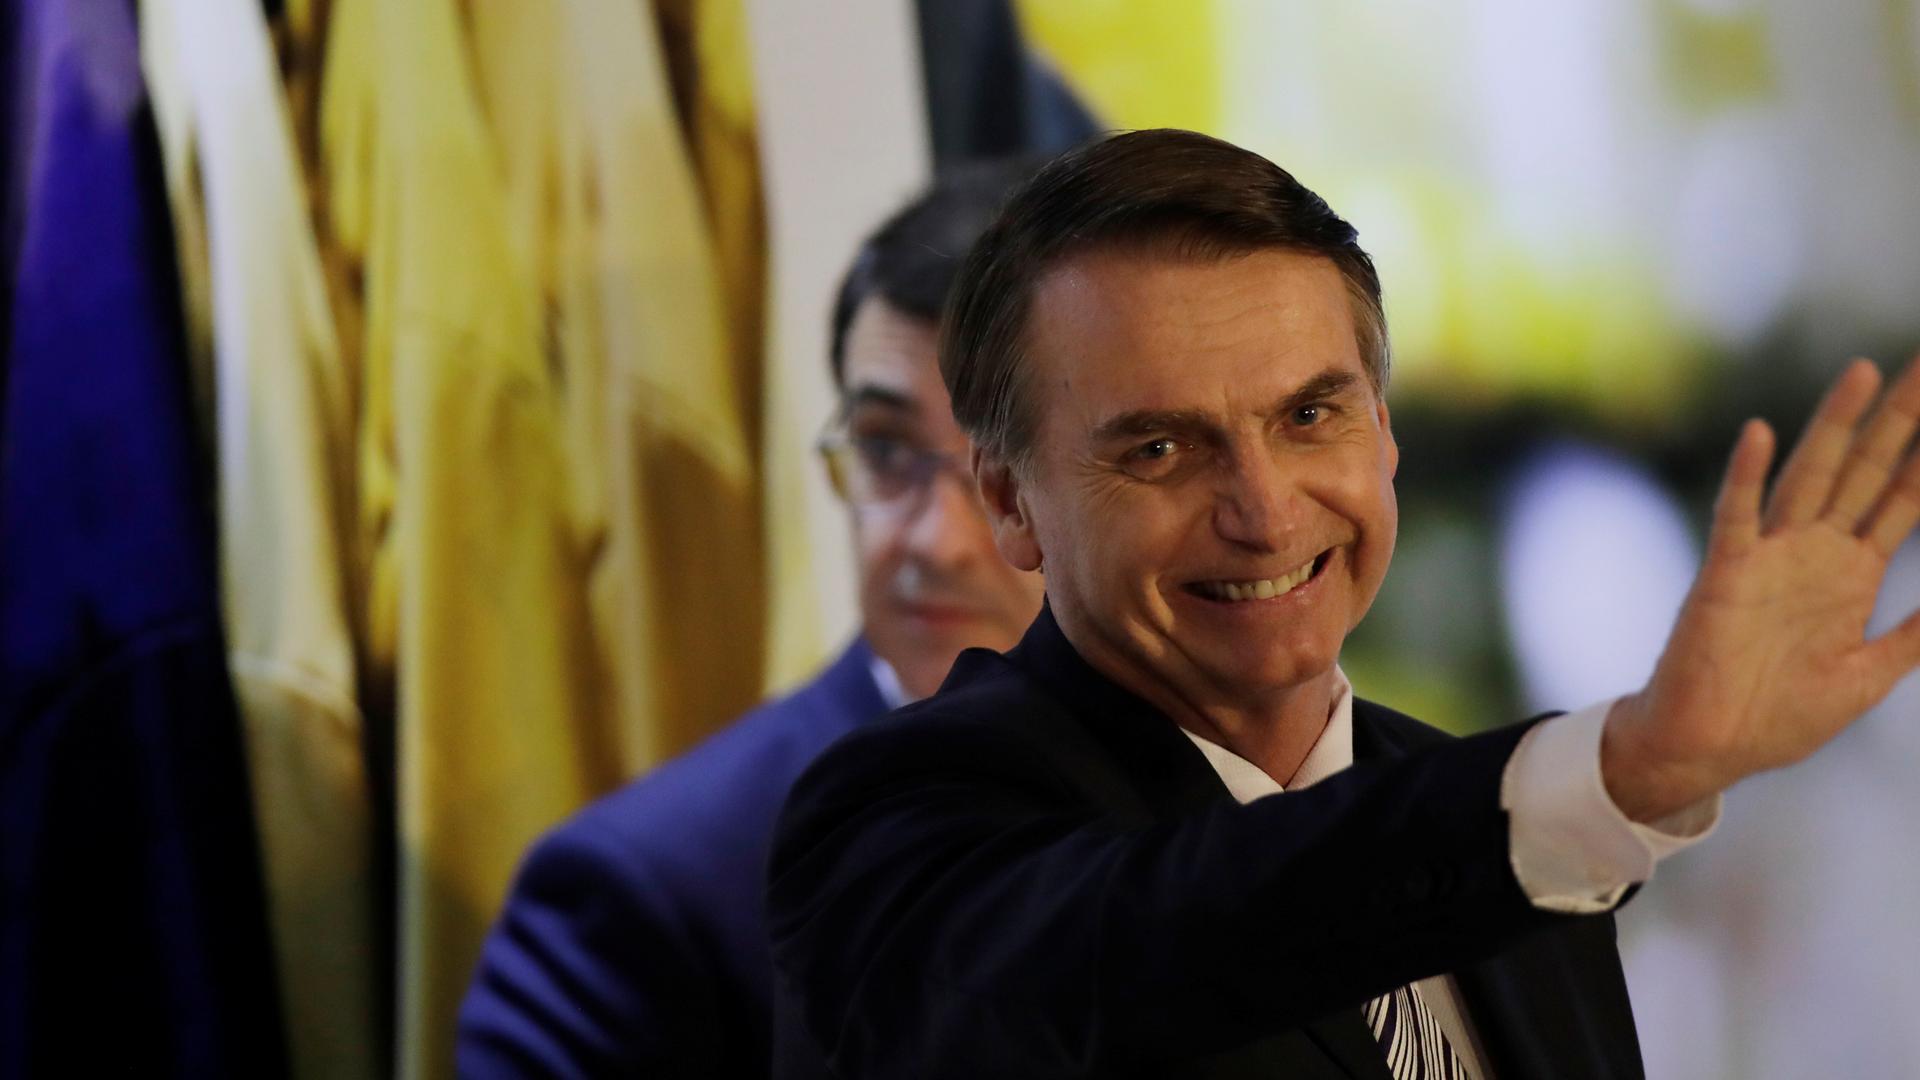 Bolsonaro smiles and puts his hand out